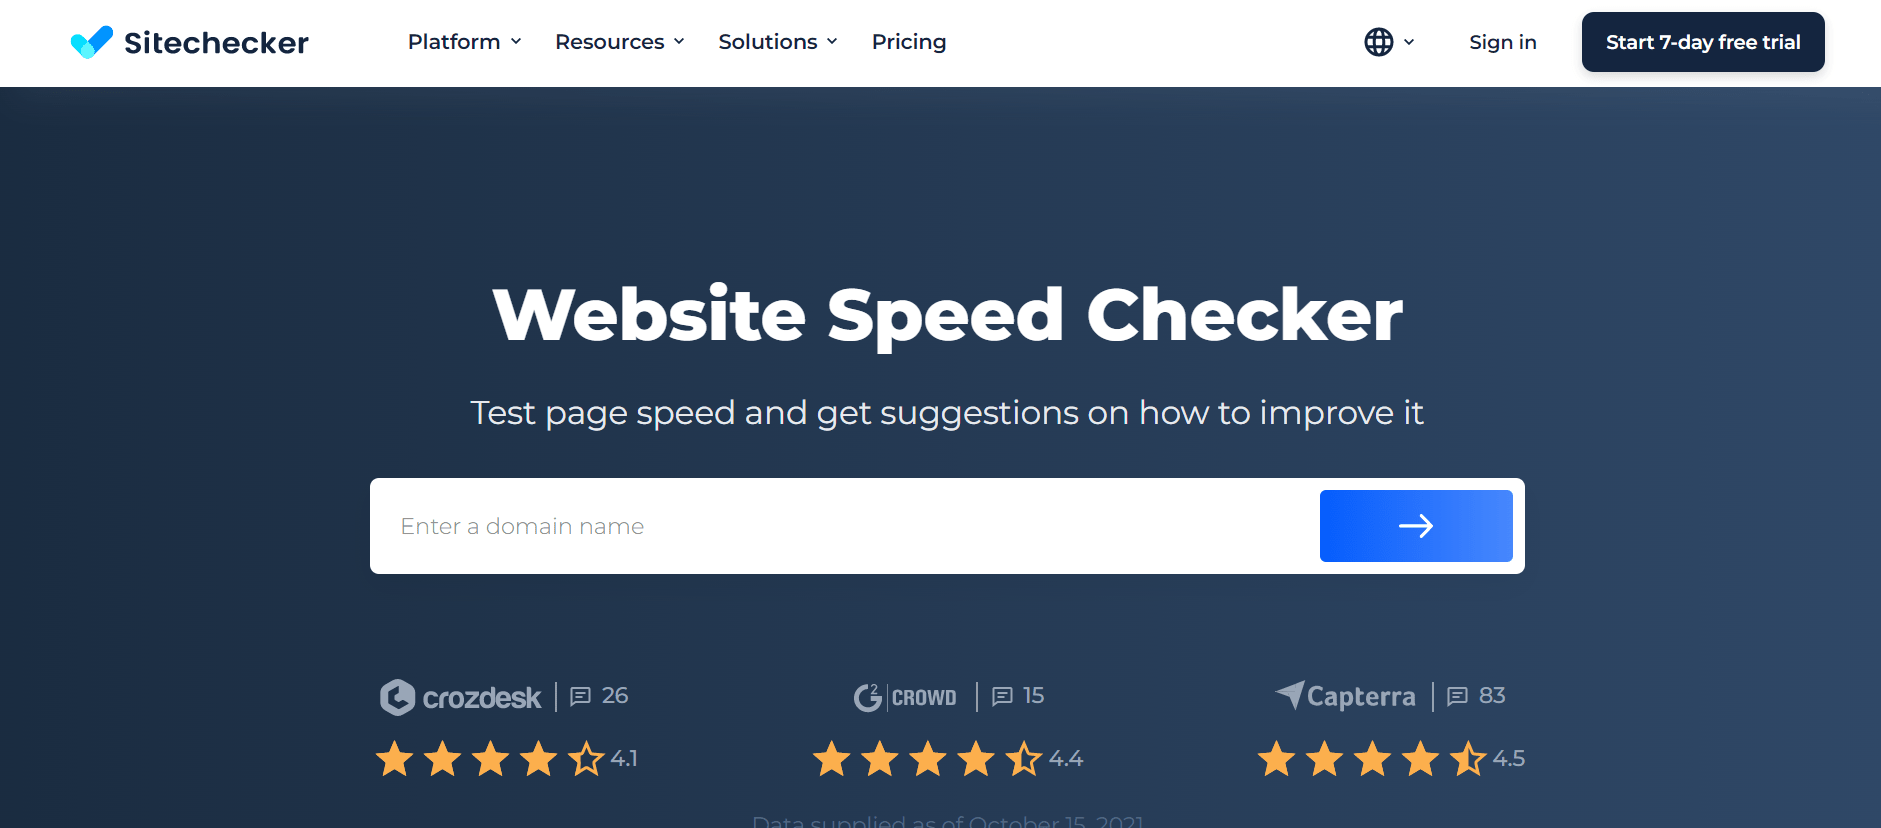 Sitechecker tool to optimize website